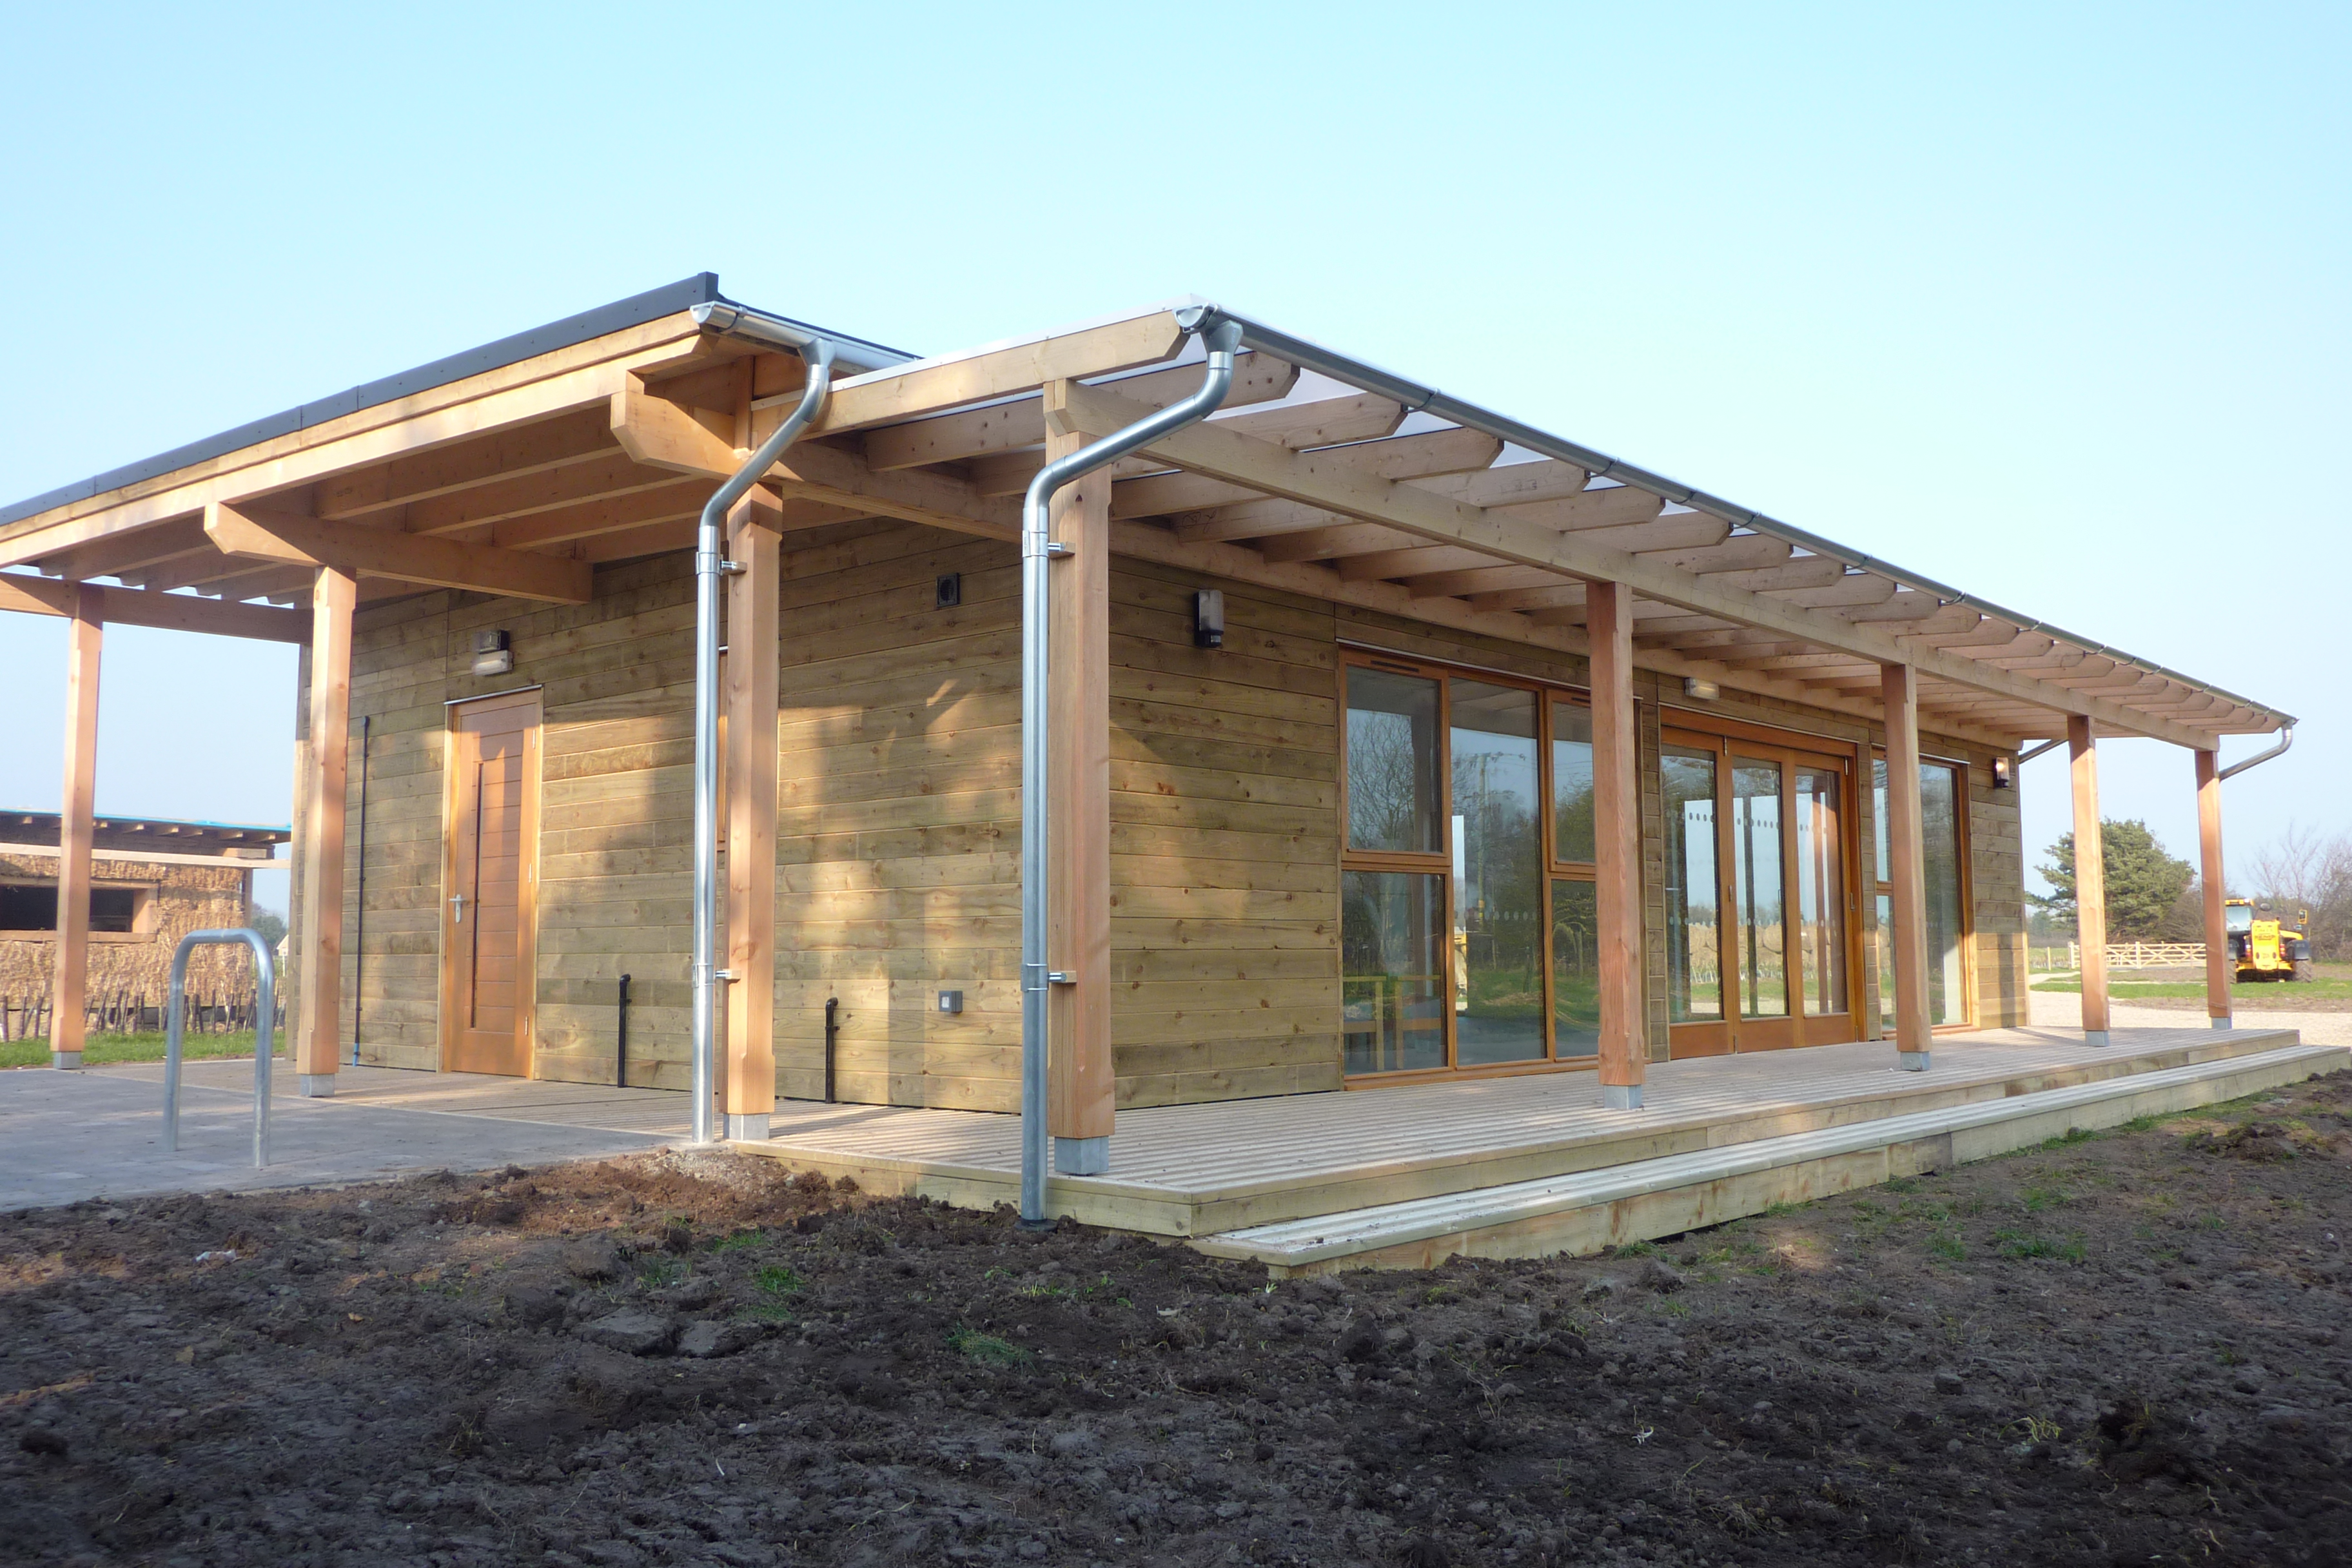 New Classroom at Densholme Community Care Farm – Hatfield, East Yorkshire